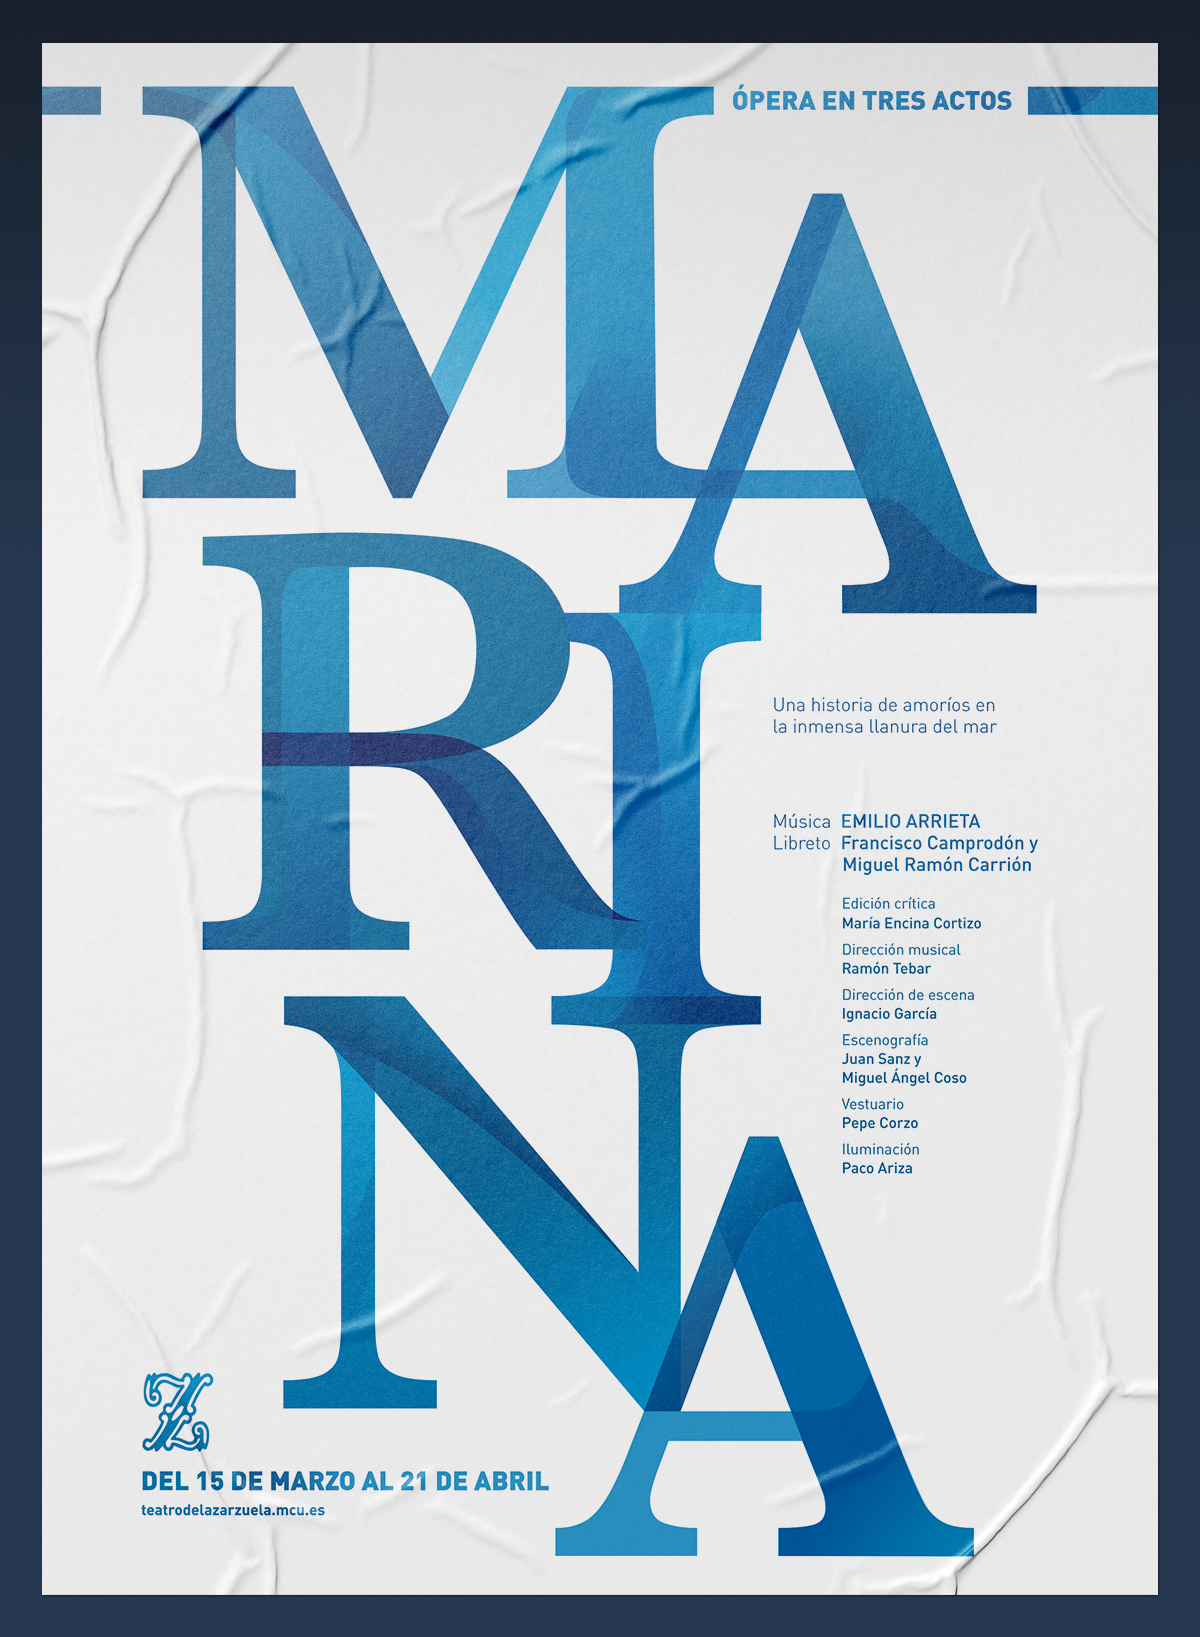 Typographic poster from the opera "Marina", by Teatro de la Zarzuela. Tea for two - advertising design.